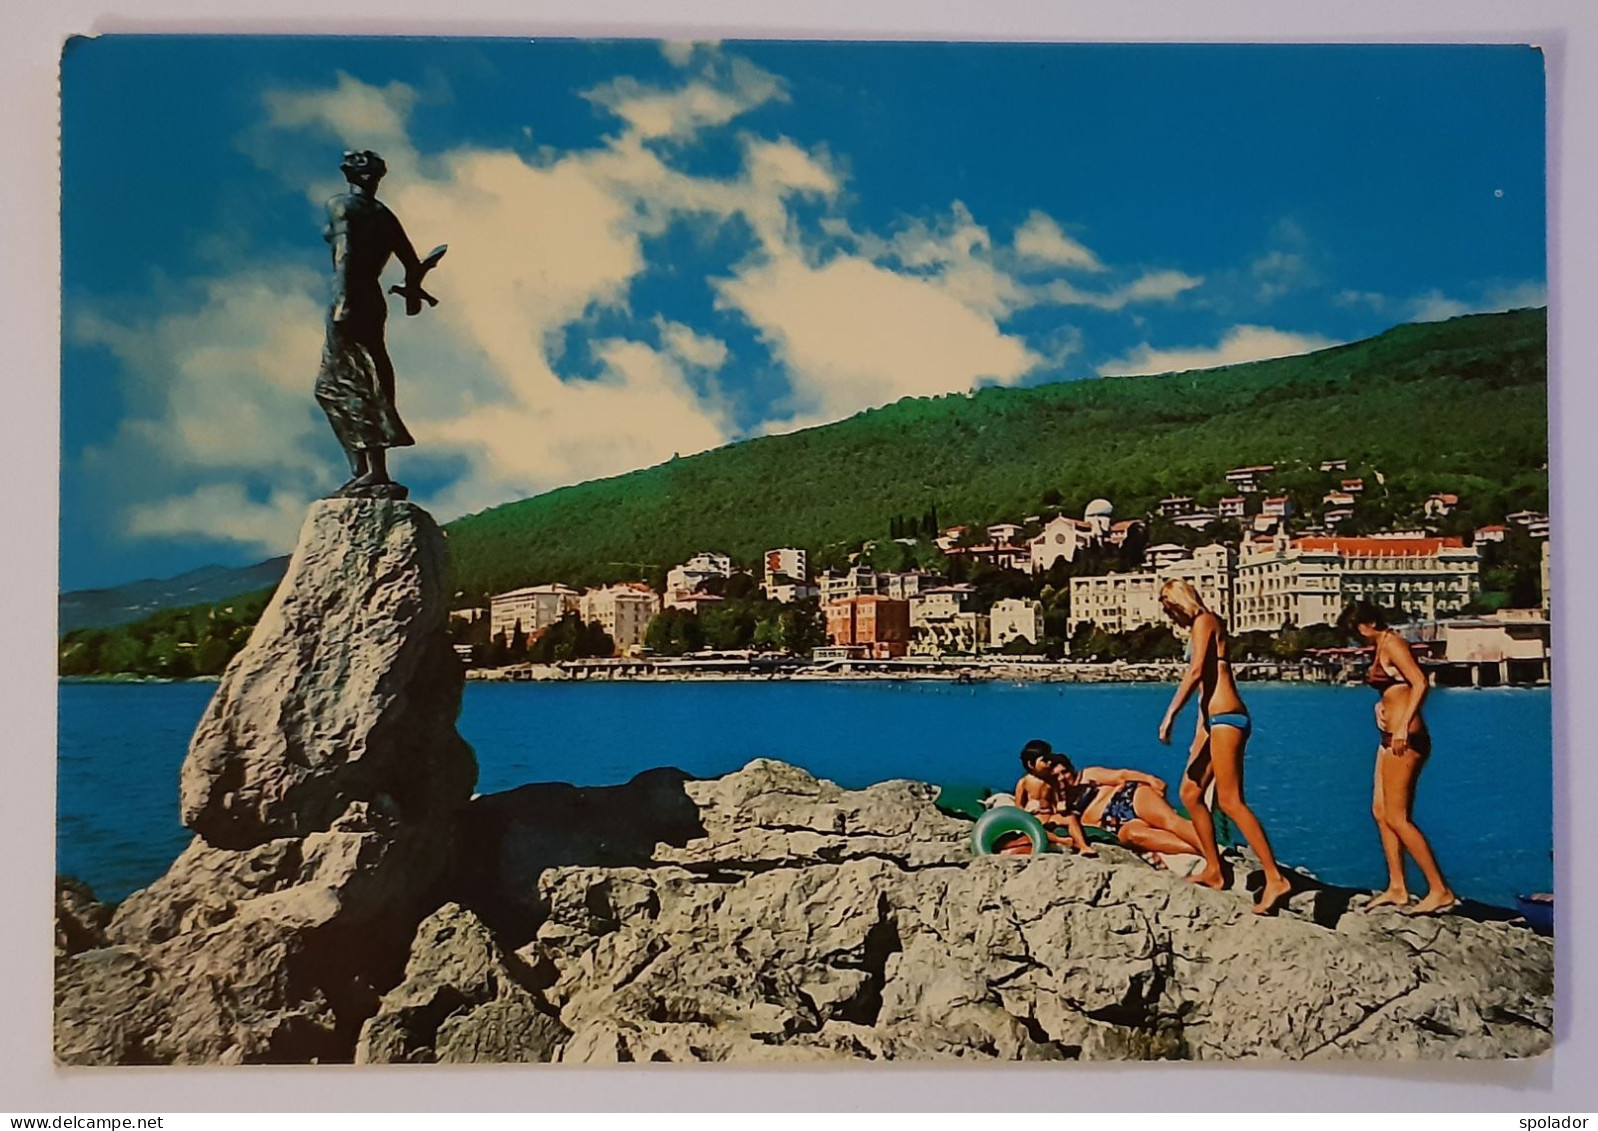 OPATIJA-Vintage Postcard-Ex-Yugoslavia-Croatia-Istra-Hrvatska-used With Stamp-1978 - Jugoslawien